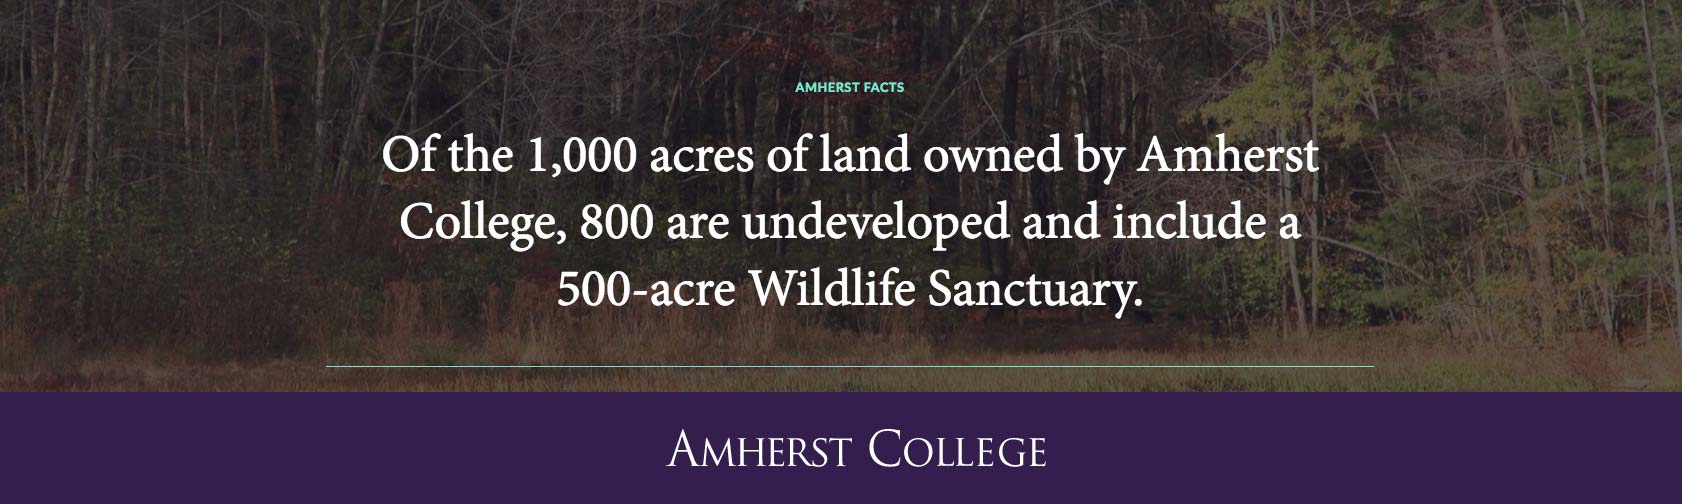 Wildlife Sanctuary Fact